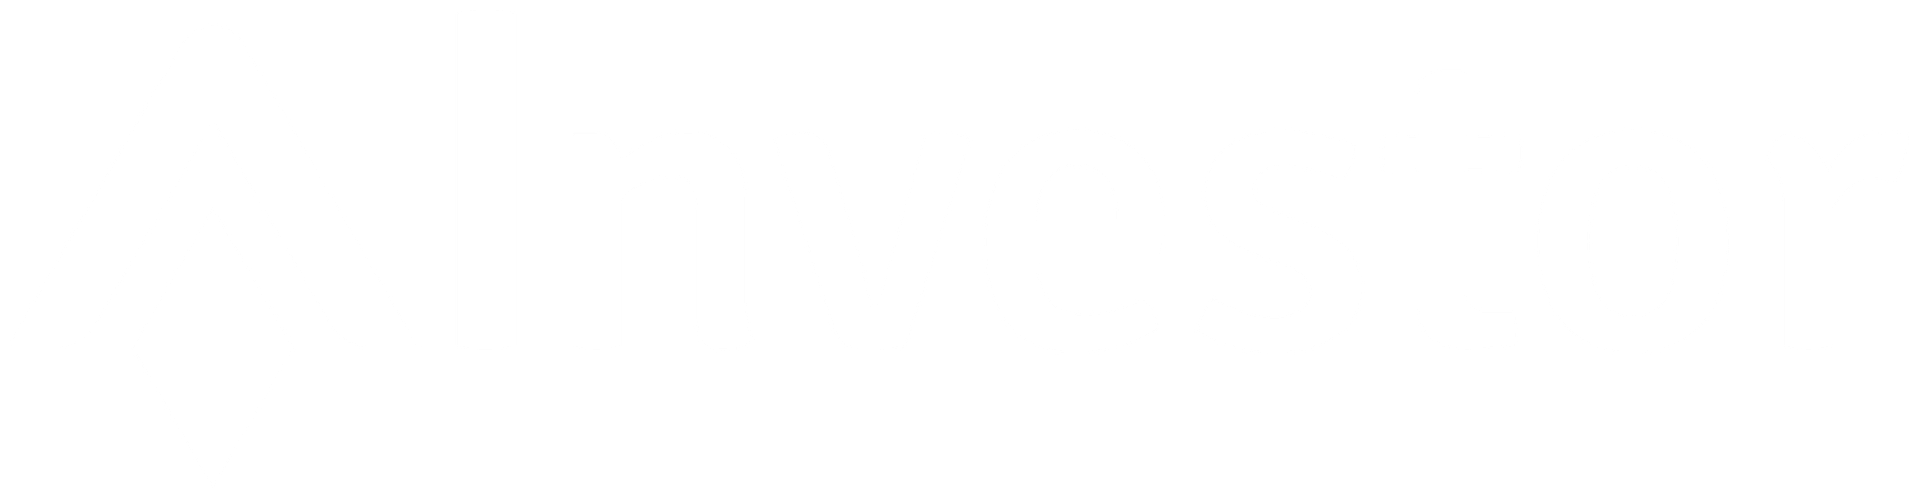 ainvestor logotipo blanco